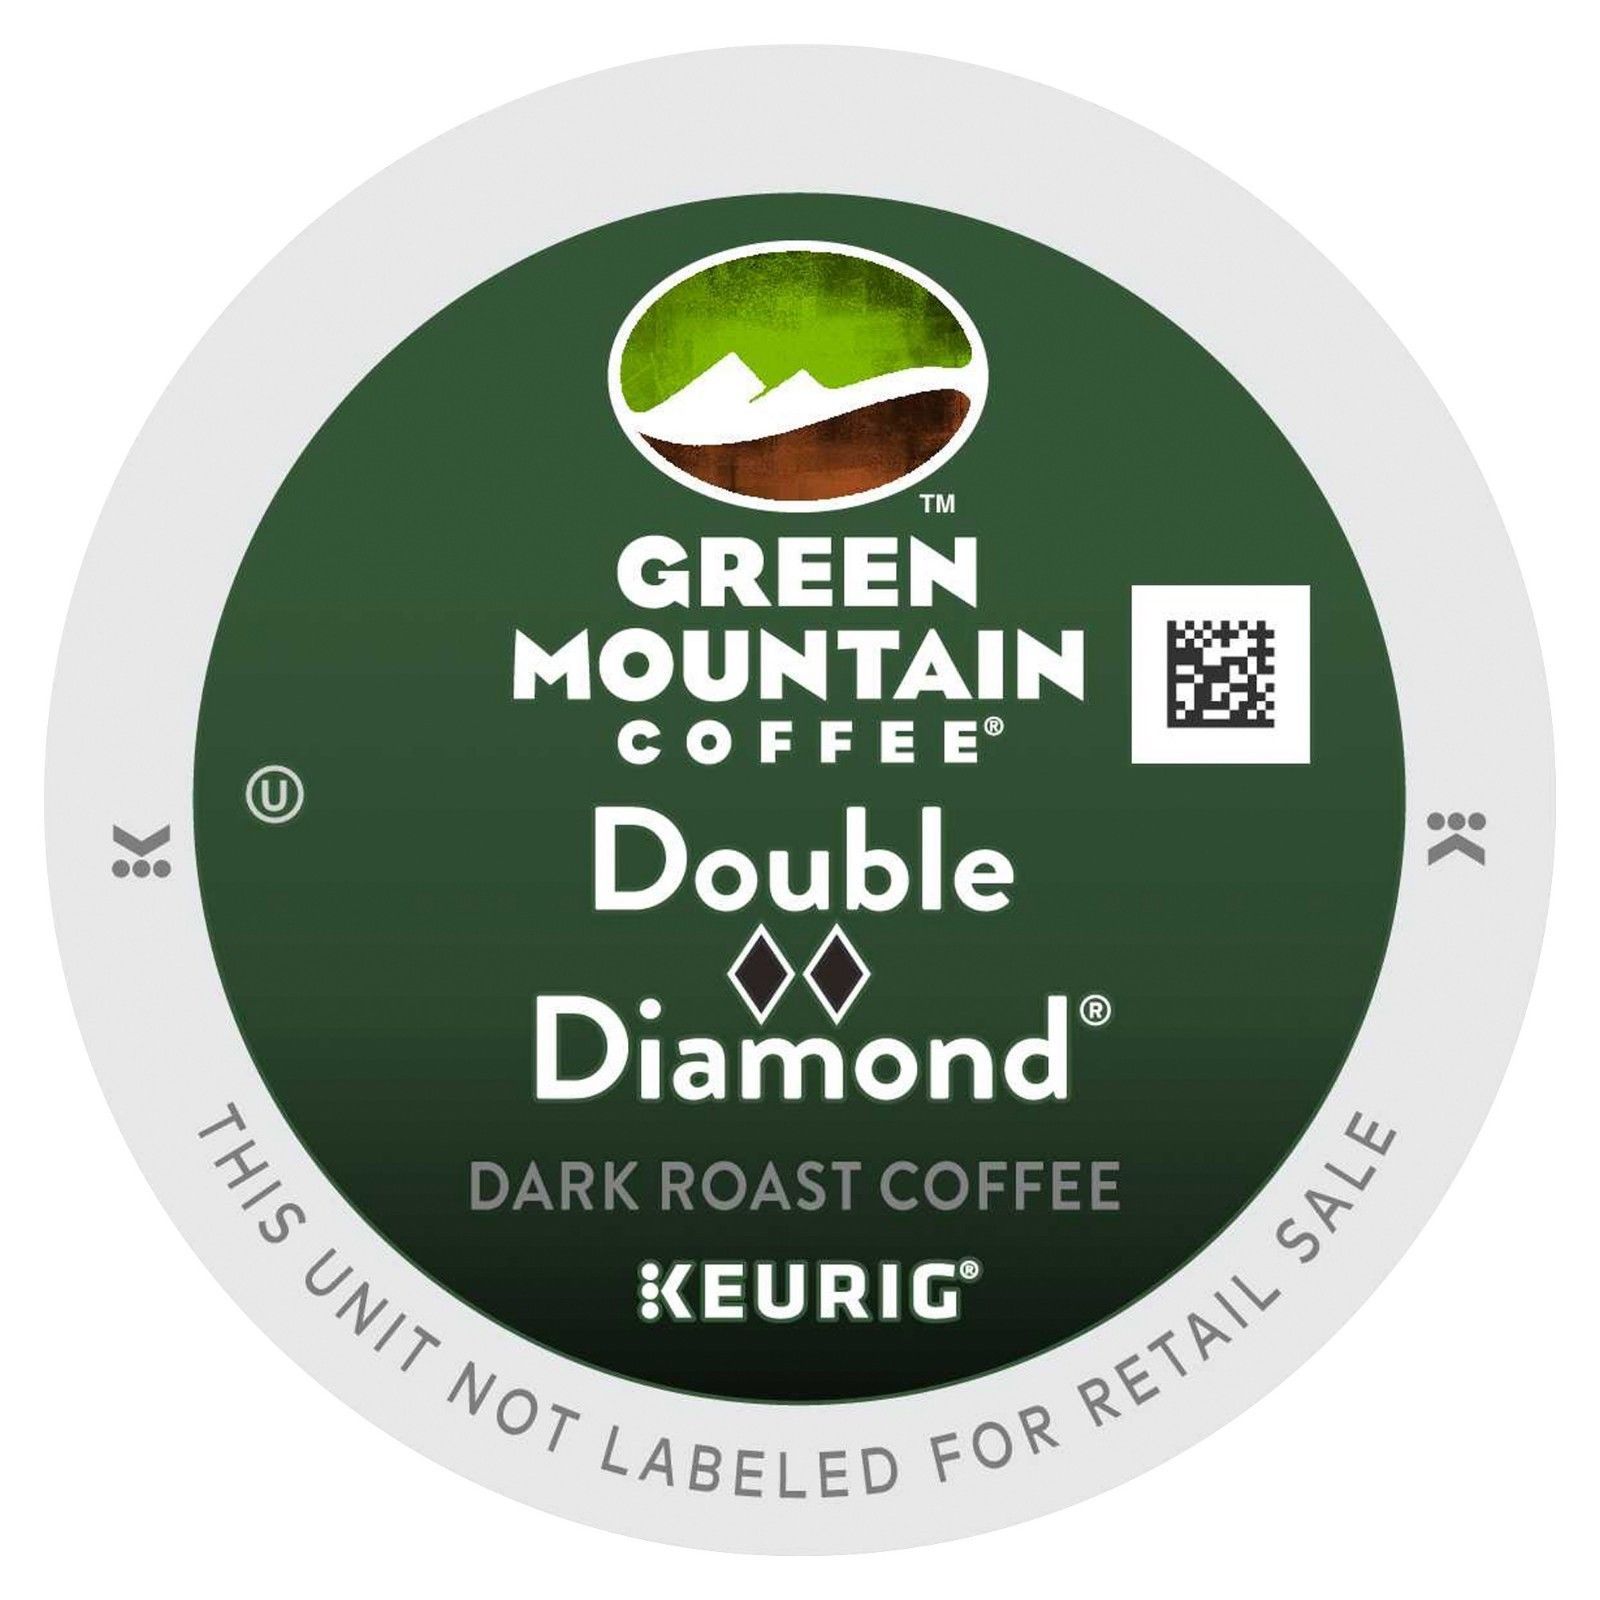 Green Mountain Double Diamond Coffee 24 to 144 Keurig Kcups Pick Any Size  - $24.89 - $104.88